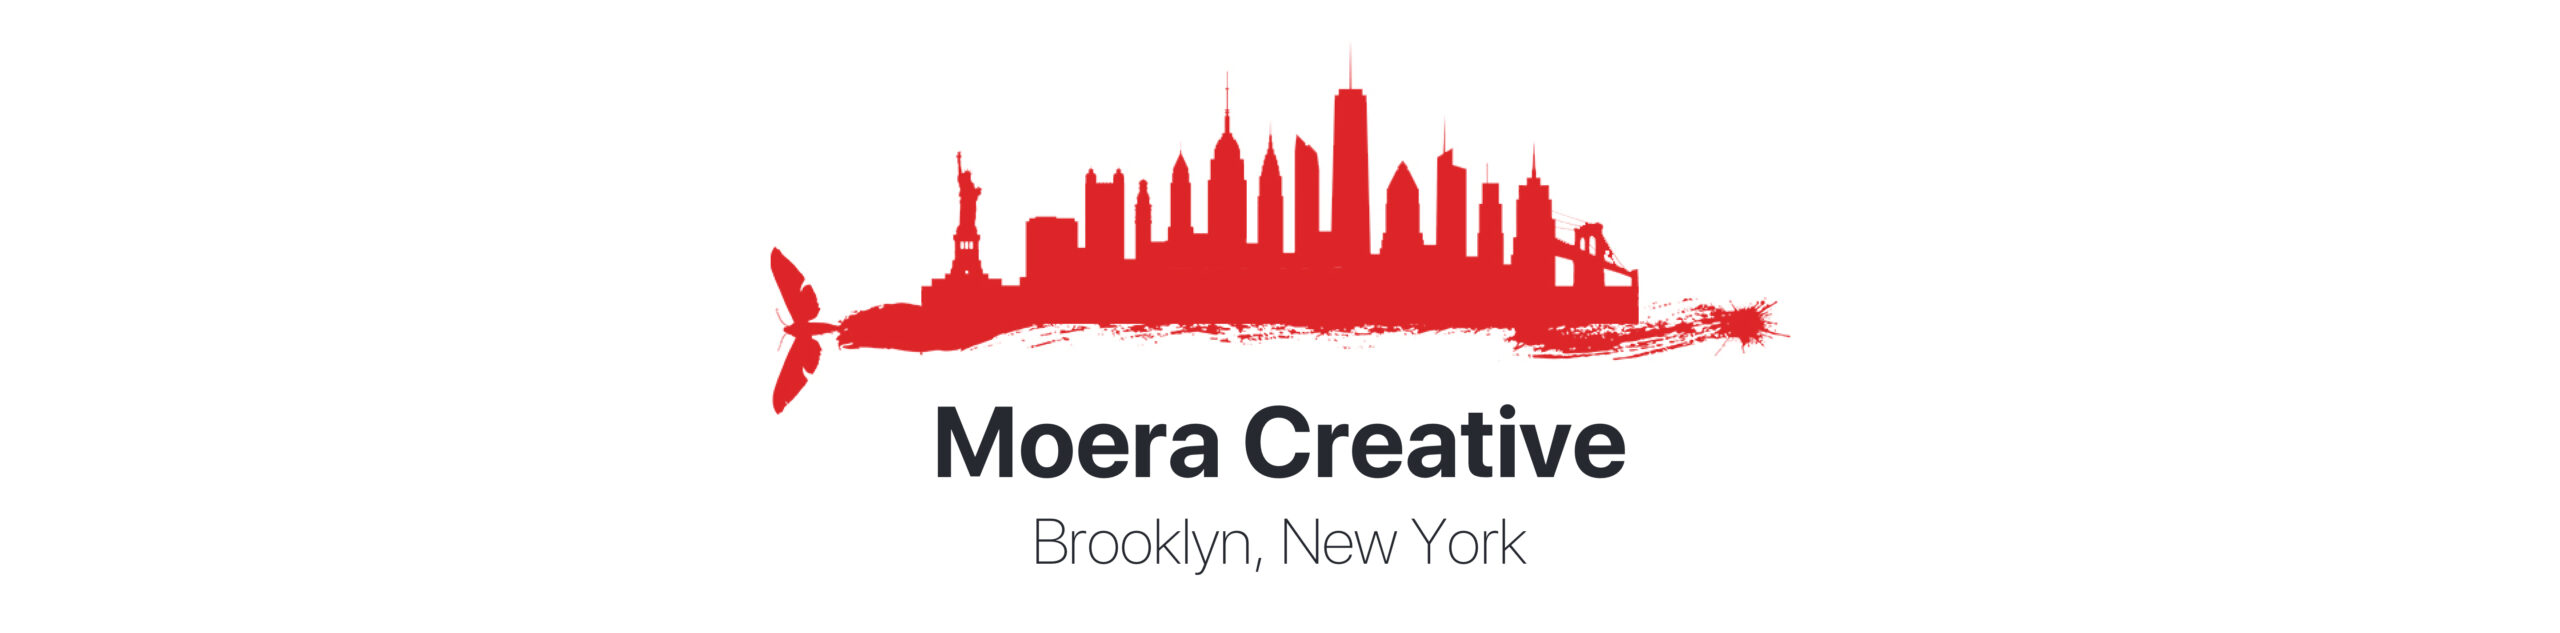 Moera Creative Design and Photography Brooklyn New York 